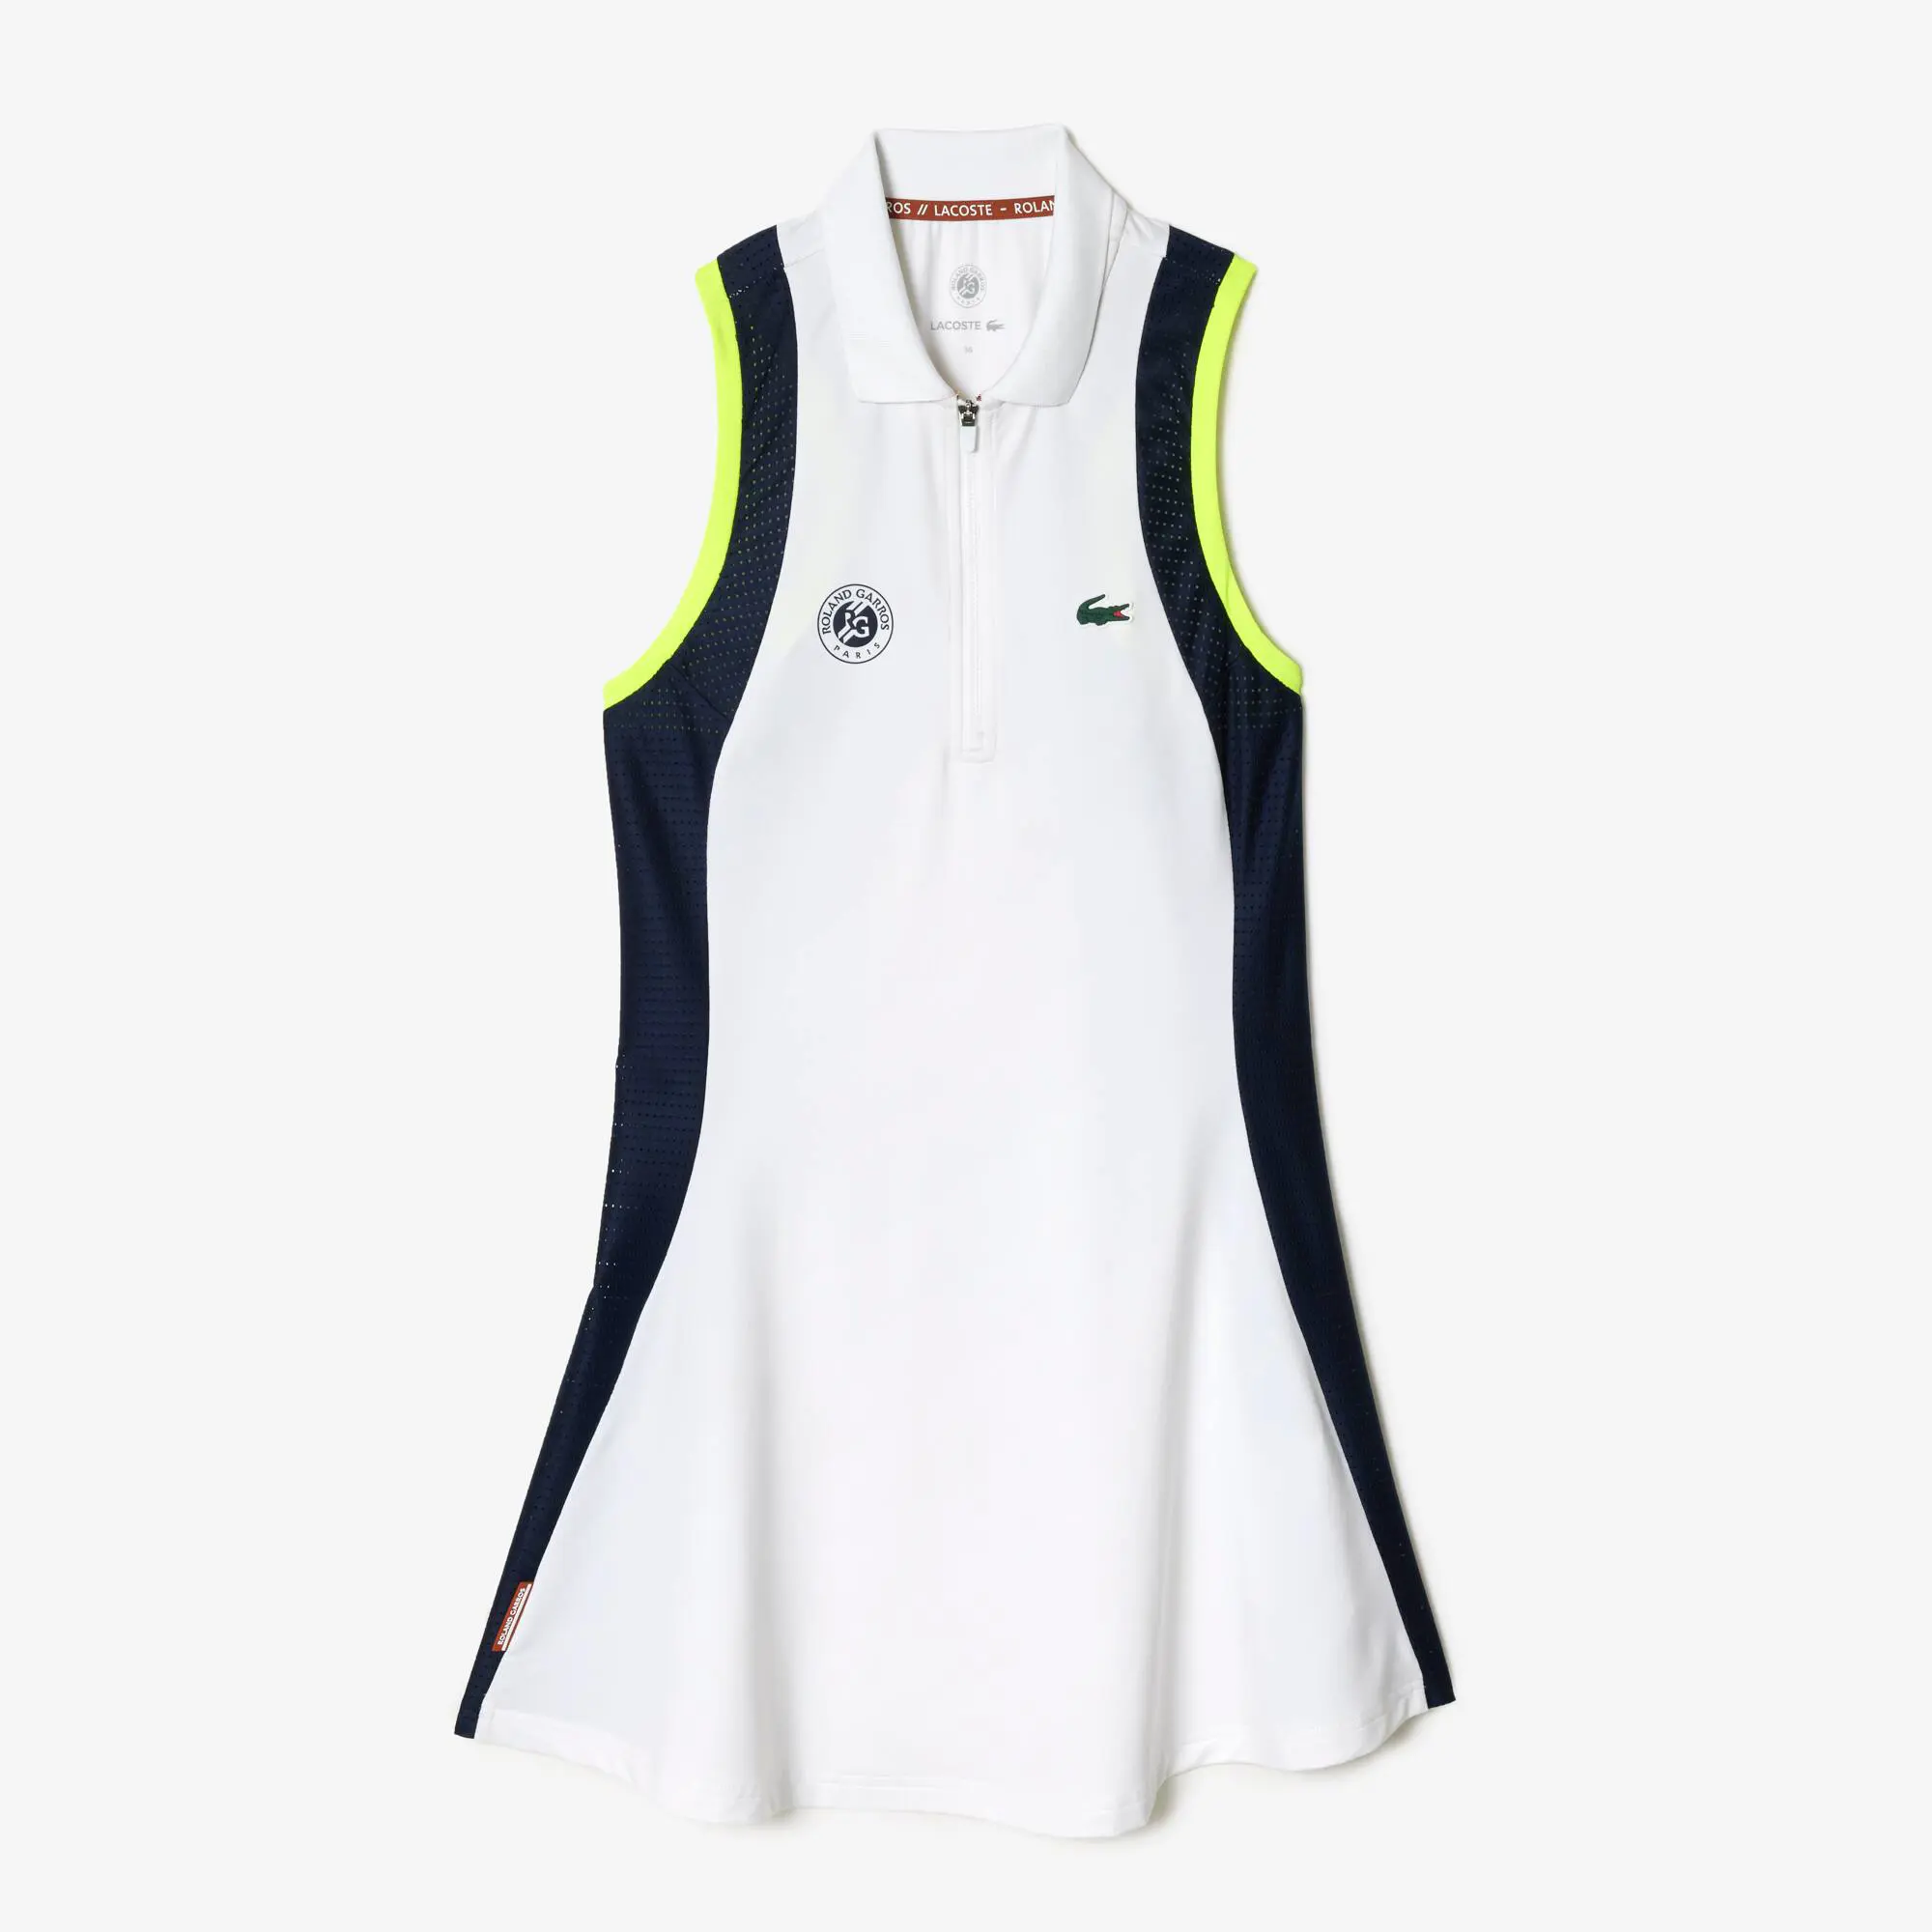 Lacoste Women’s Lacoste Sport Roland Garros Edition Sleeveless Dress. 2